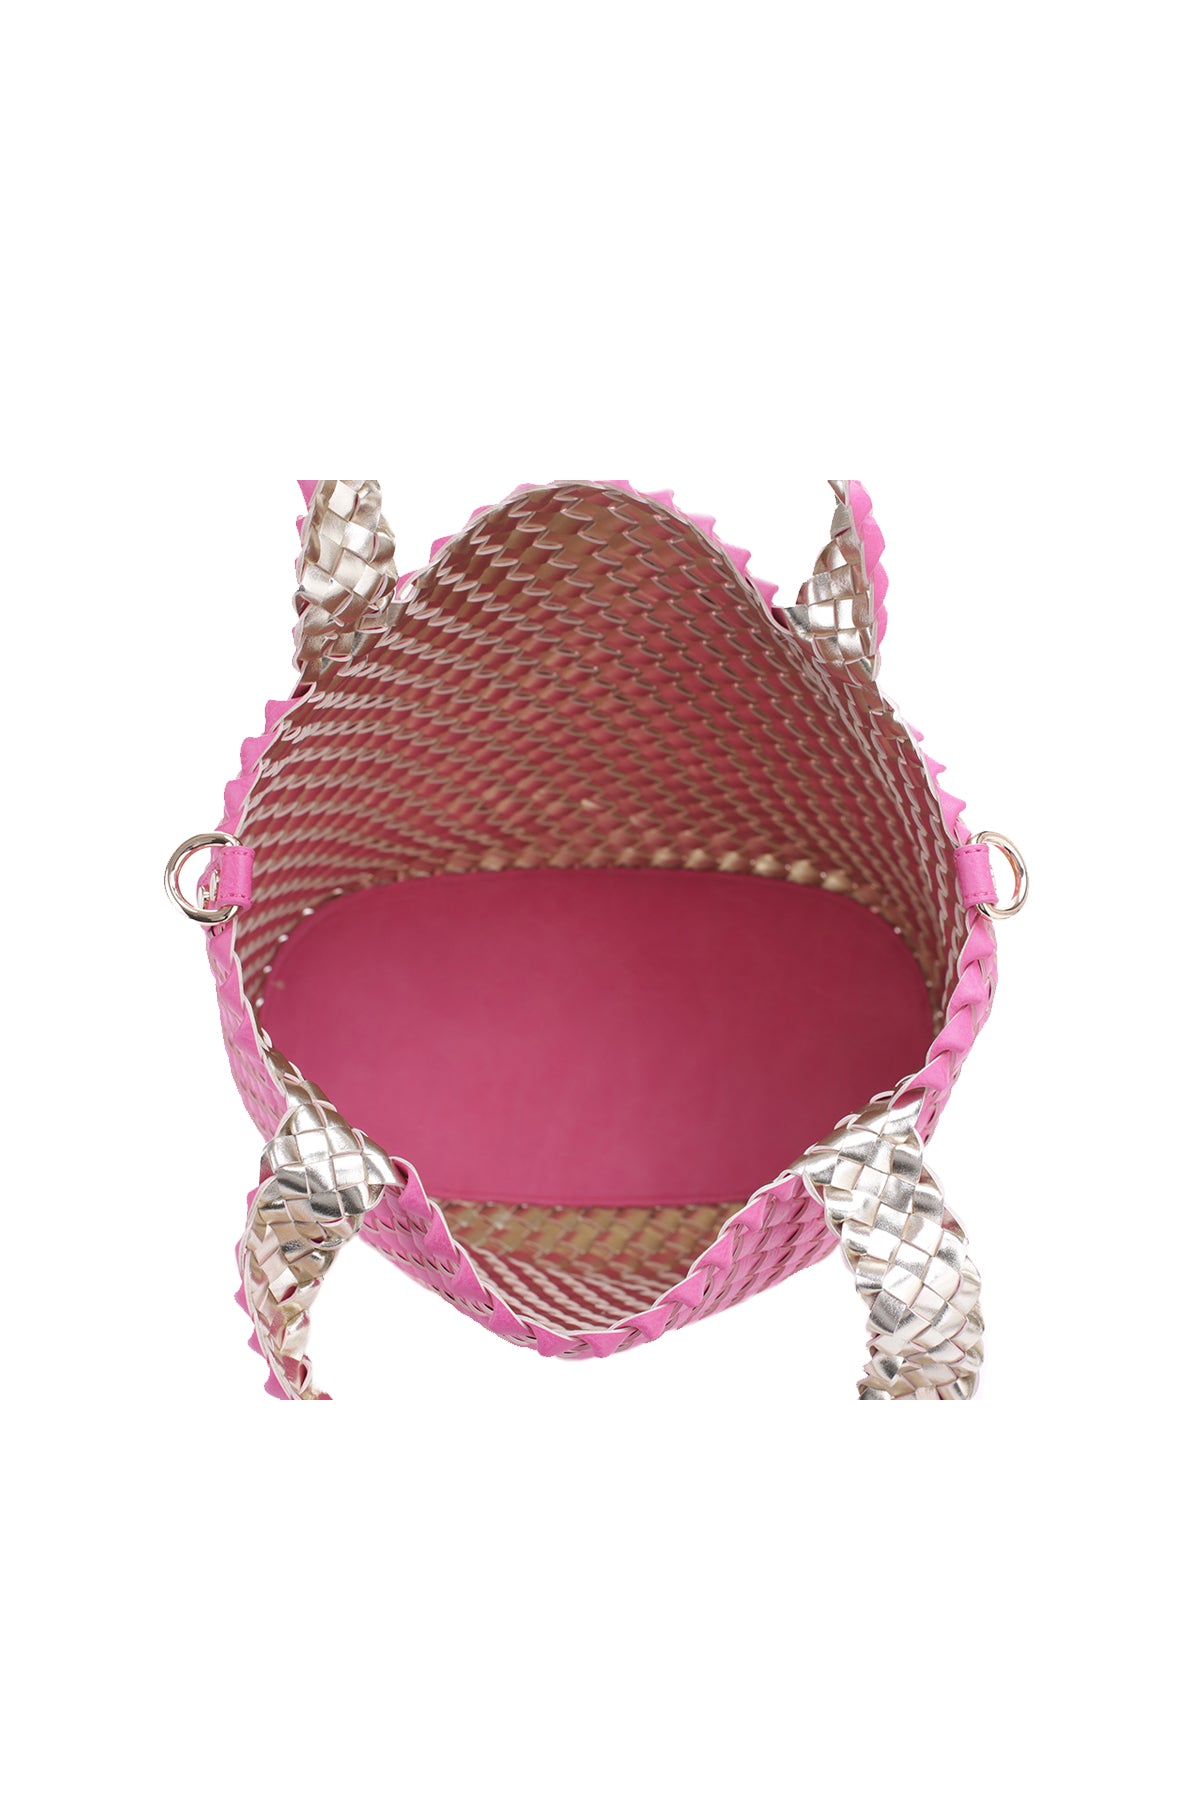 Small Plastic Basket Weave Tote, Blush, 10 x 7 inches, Mardel